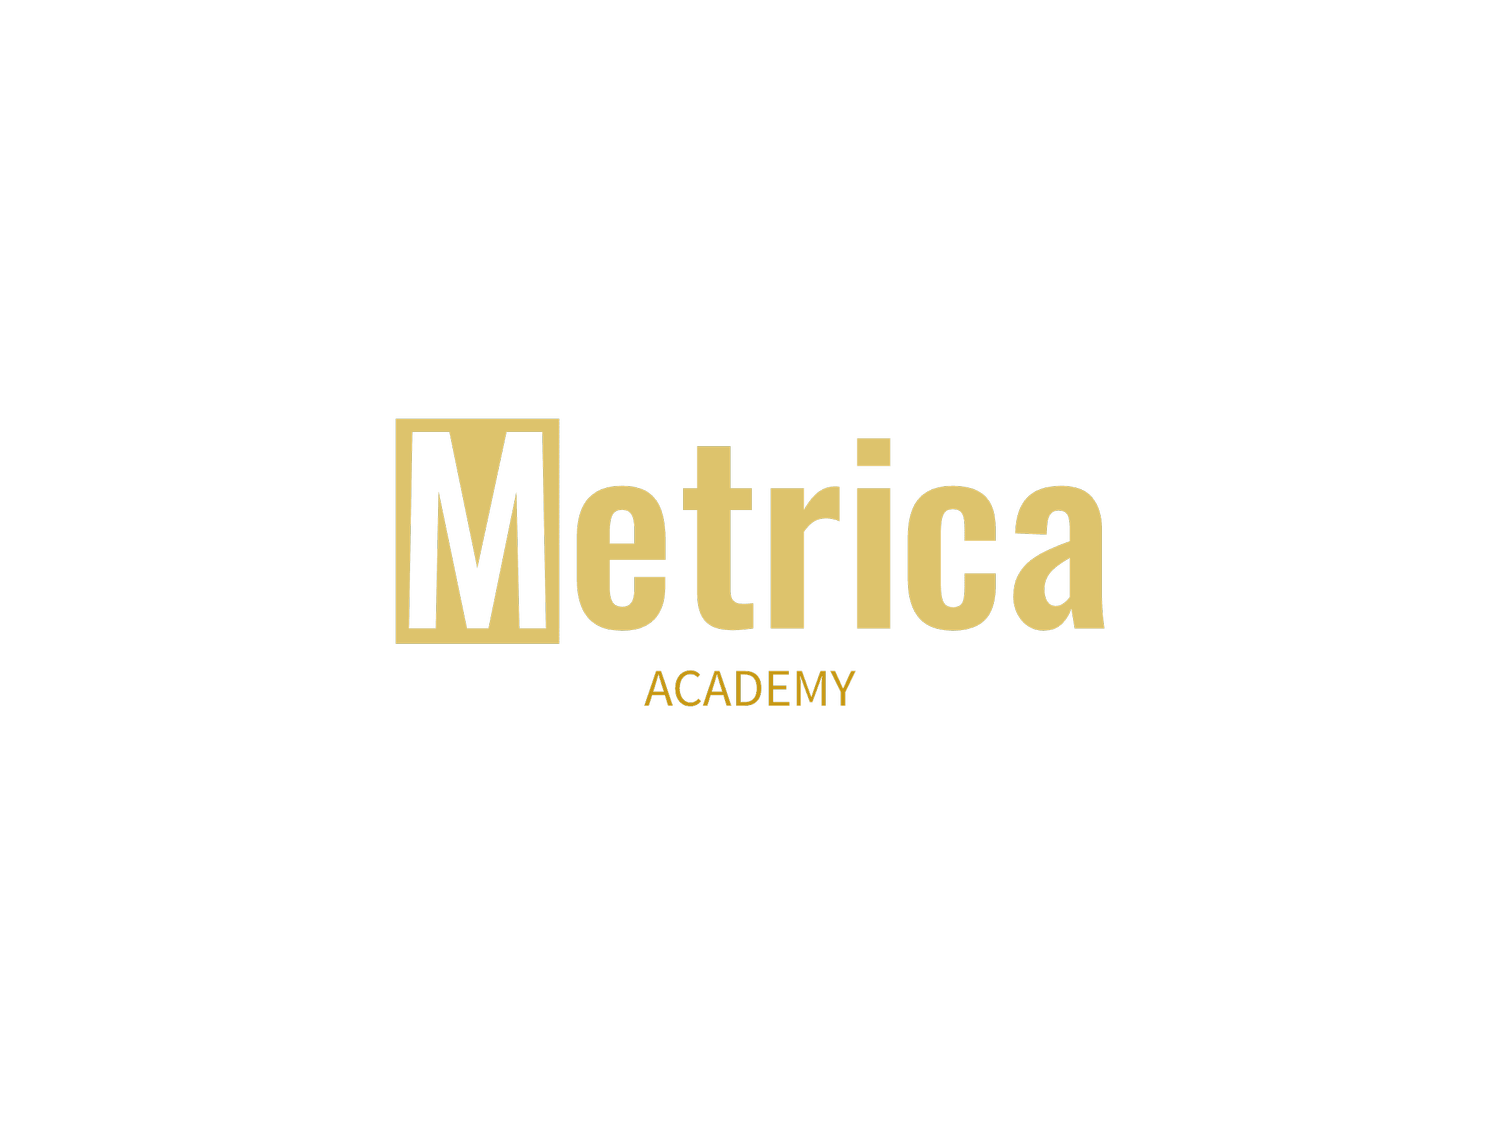 Metrica Academy